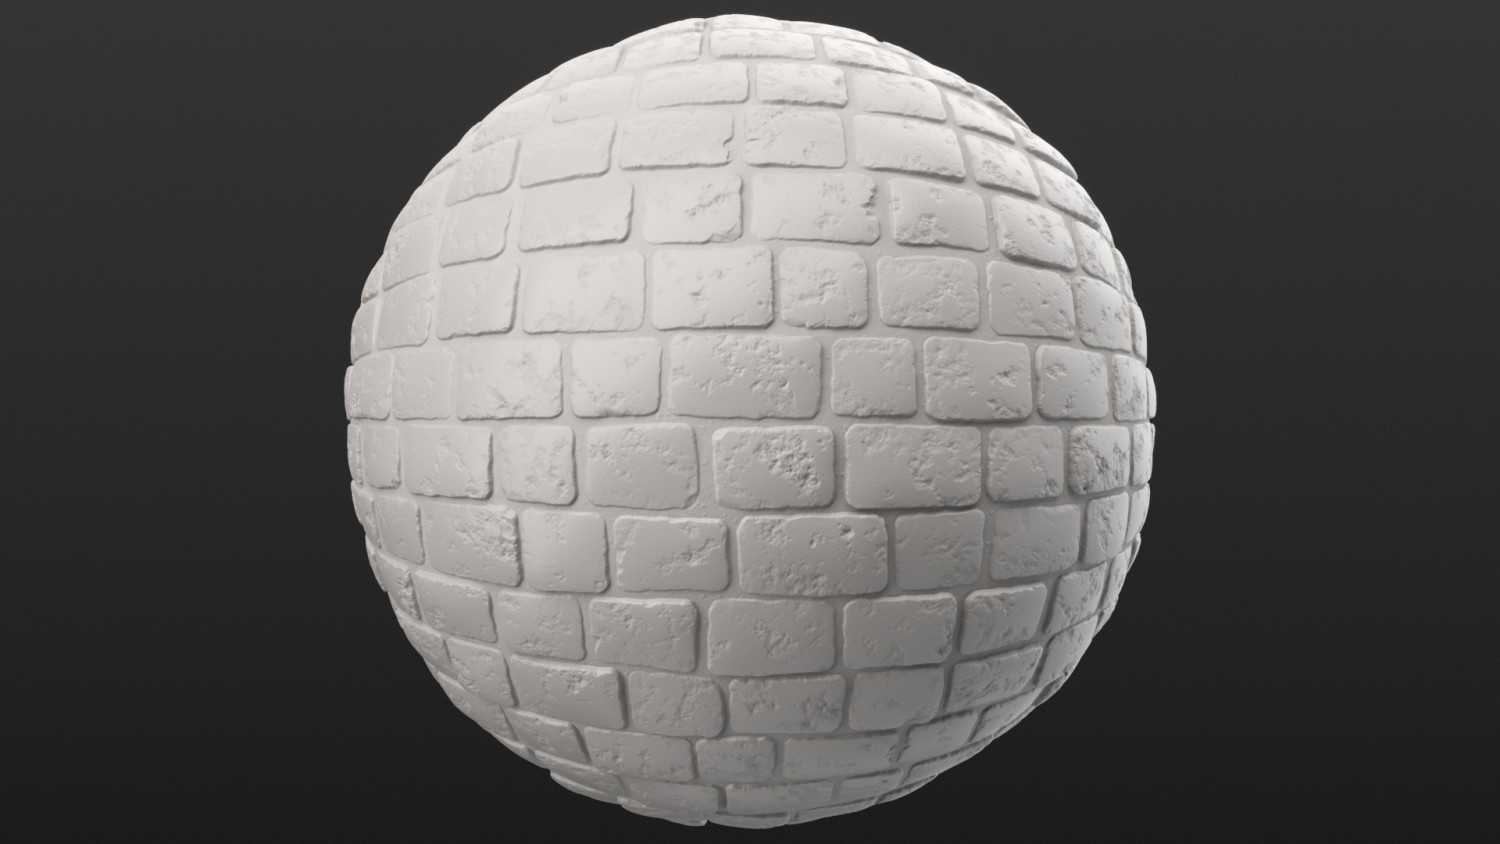 Stone brick pavement texture